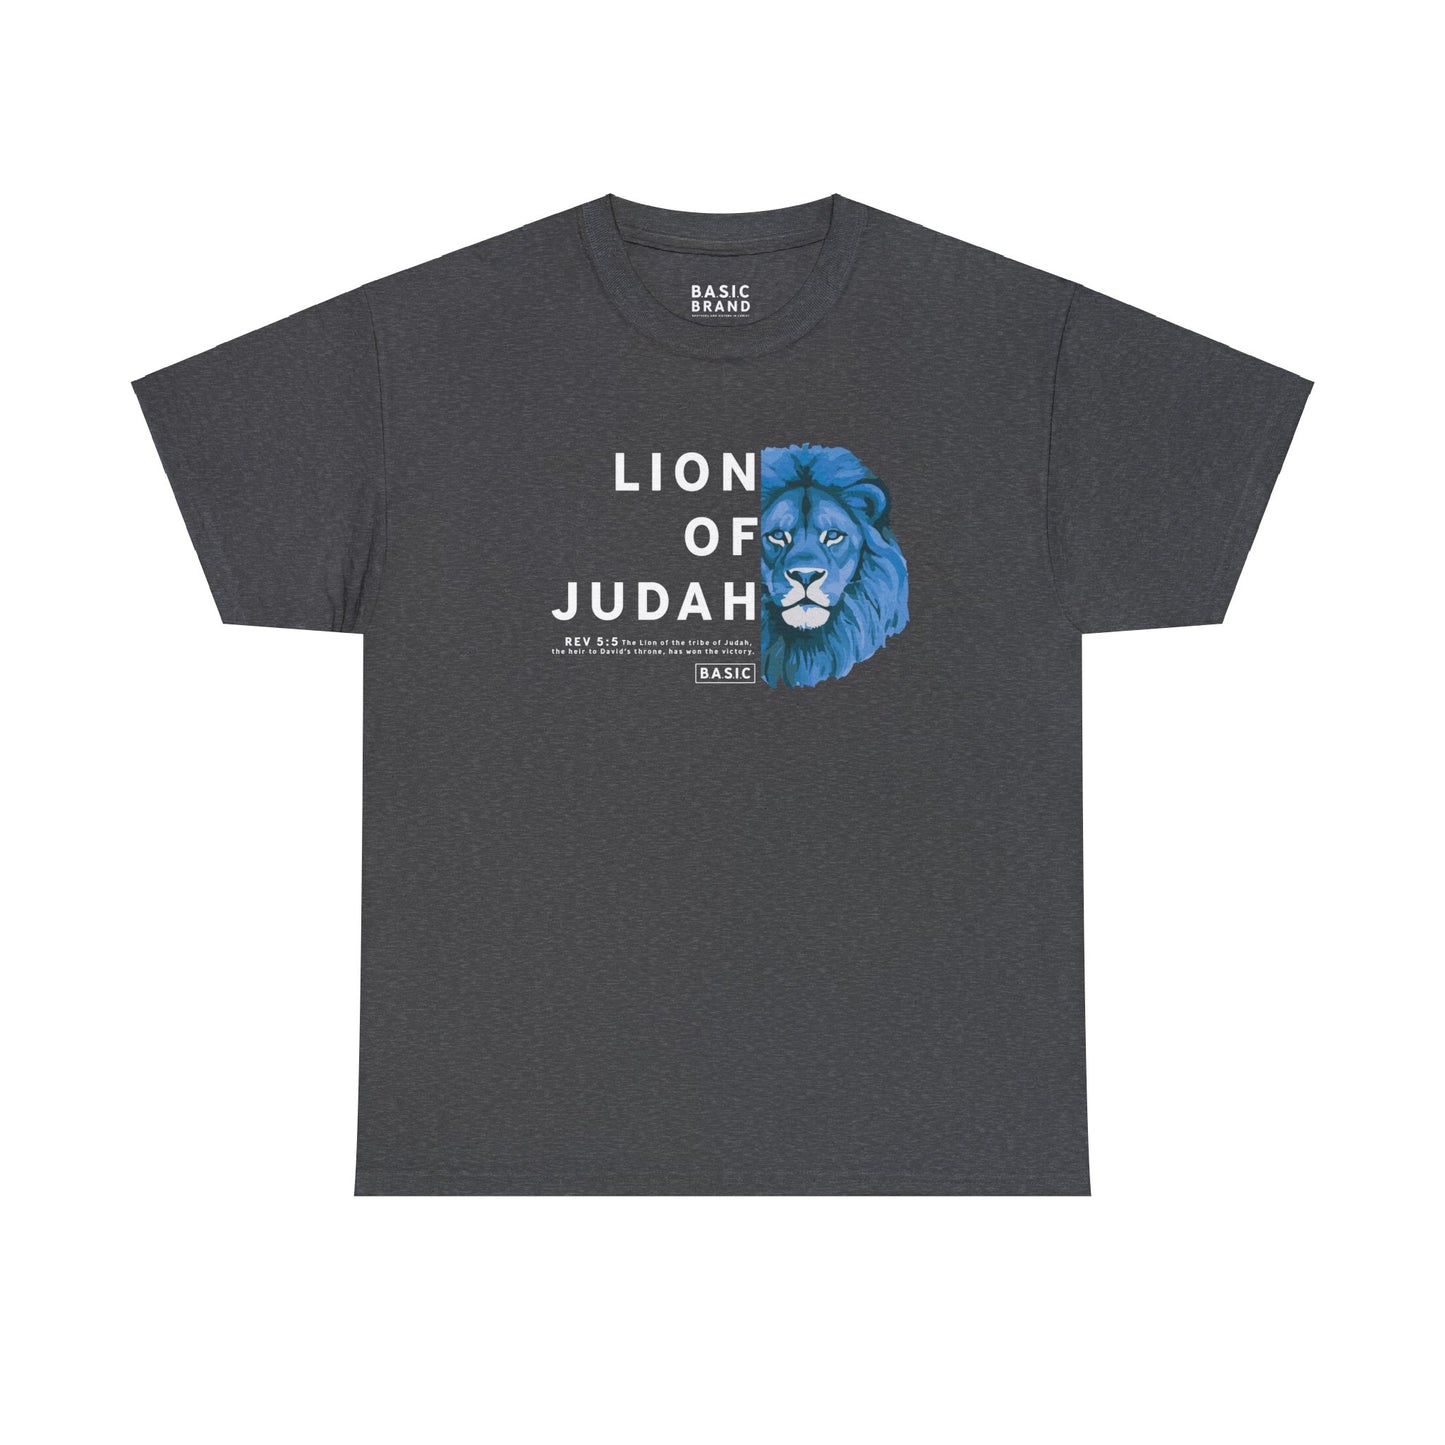 Unisex B.A.S.I.C "Lion of Judah" White Text Tee Shirt